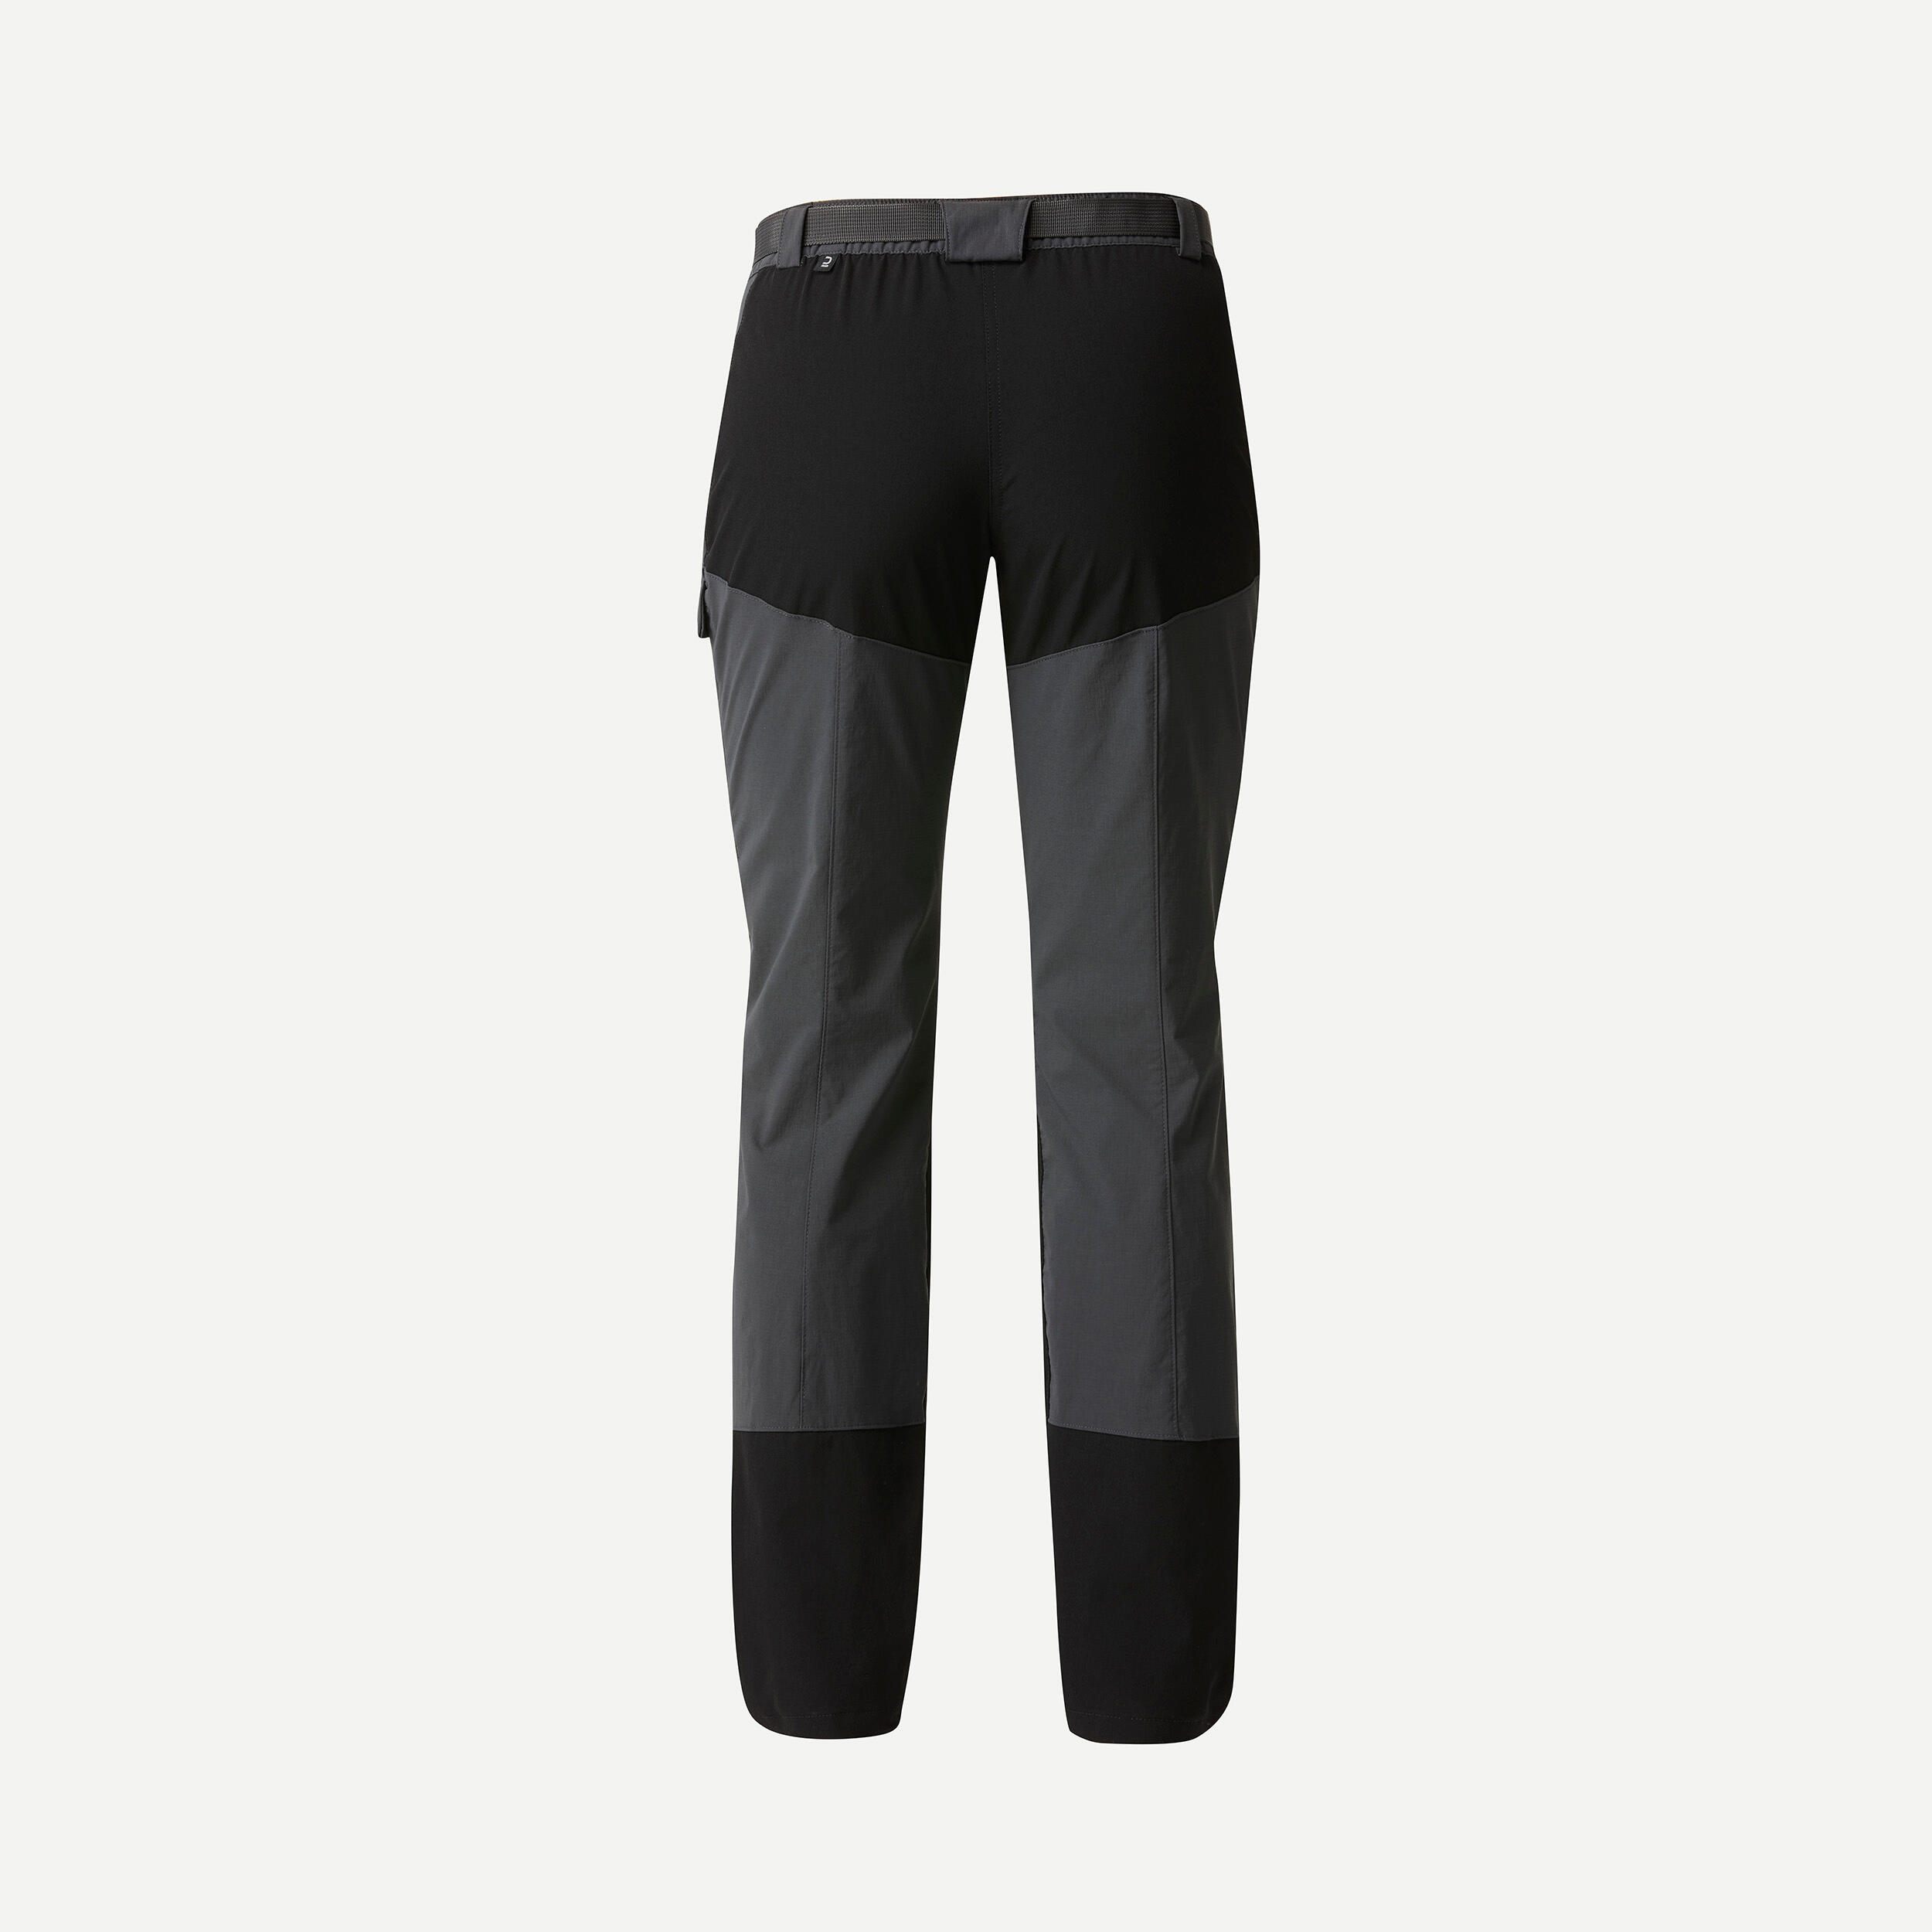 Women's Hiking Pants - MT 500 Grey - Carbon grey, Black, Carbon